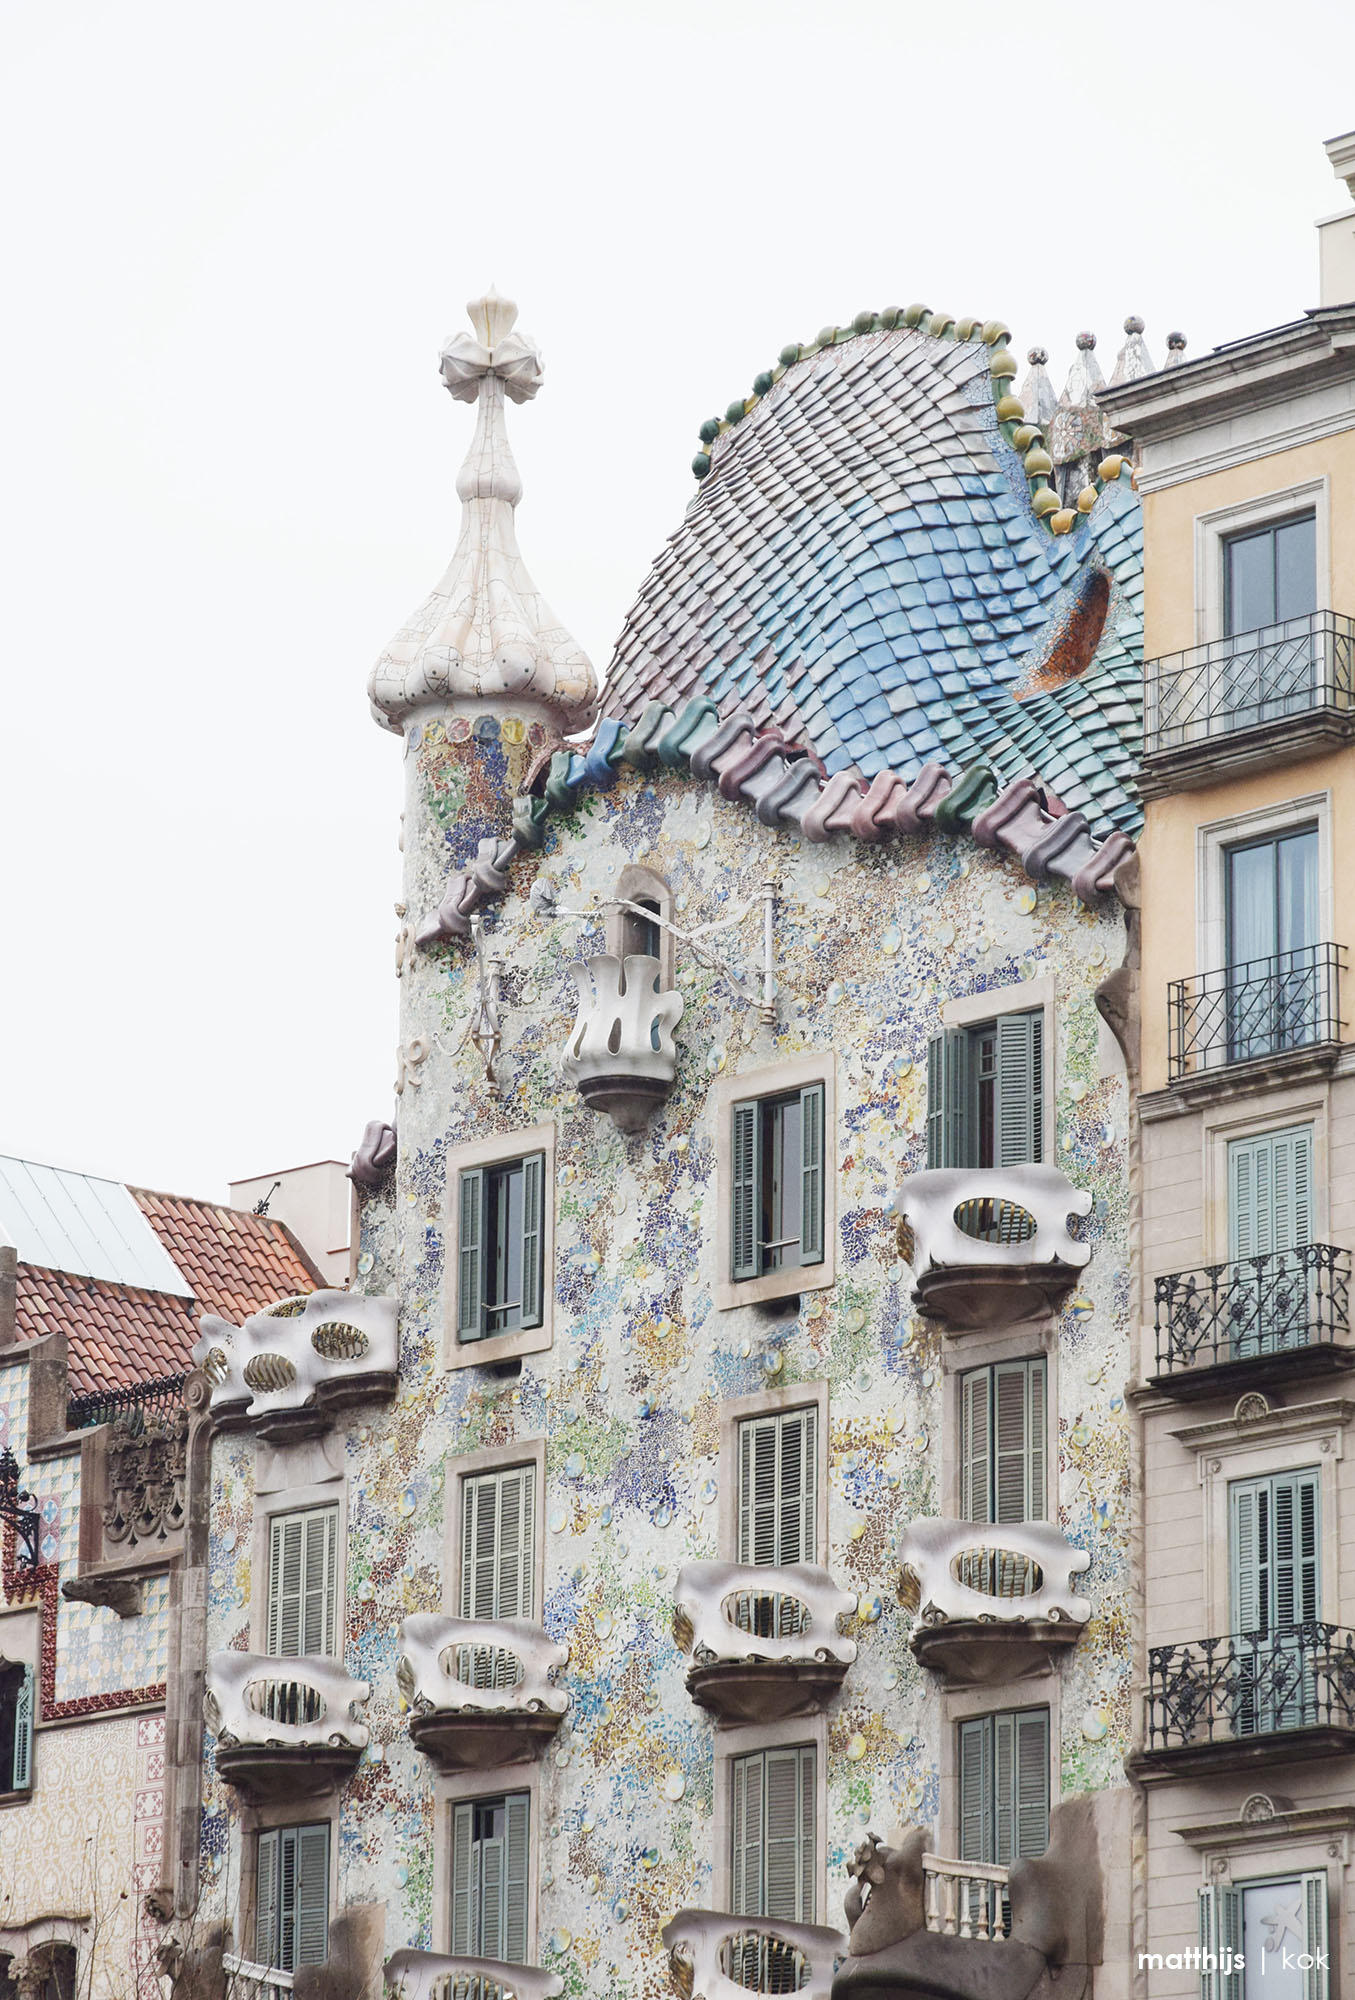 Casa Batlló, Barcelona, Spain | Photo by Matthijs Kok